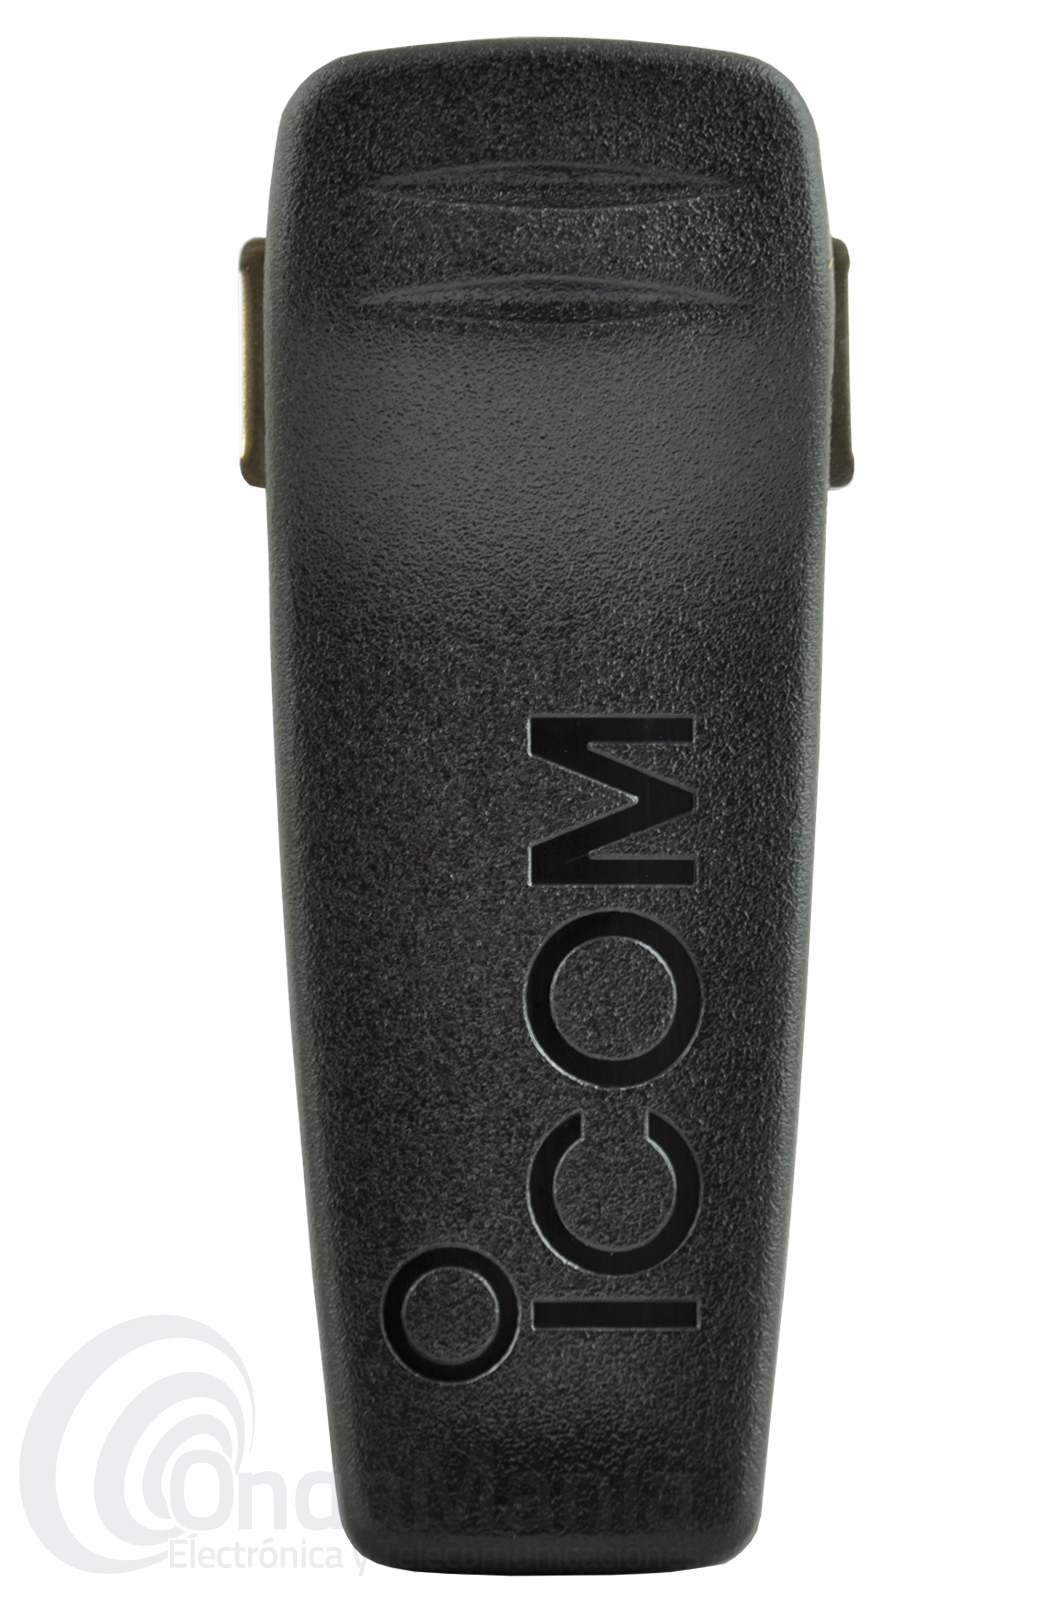 ICOM MB-127 ICOM Handheld Belt Clips